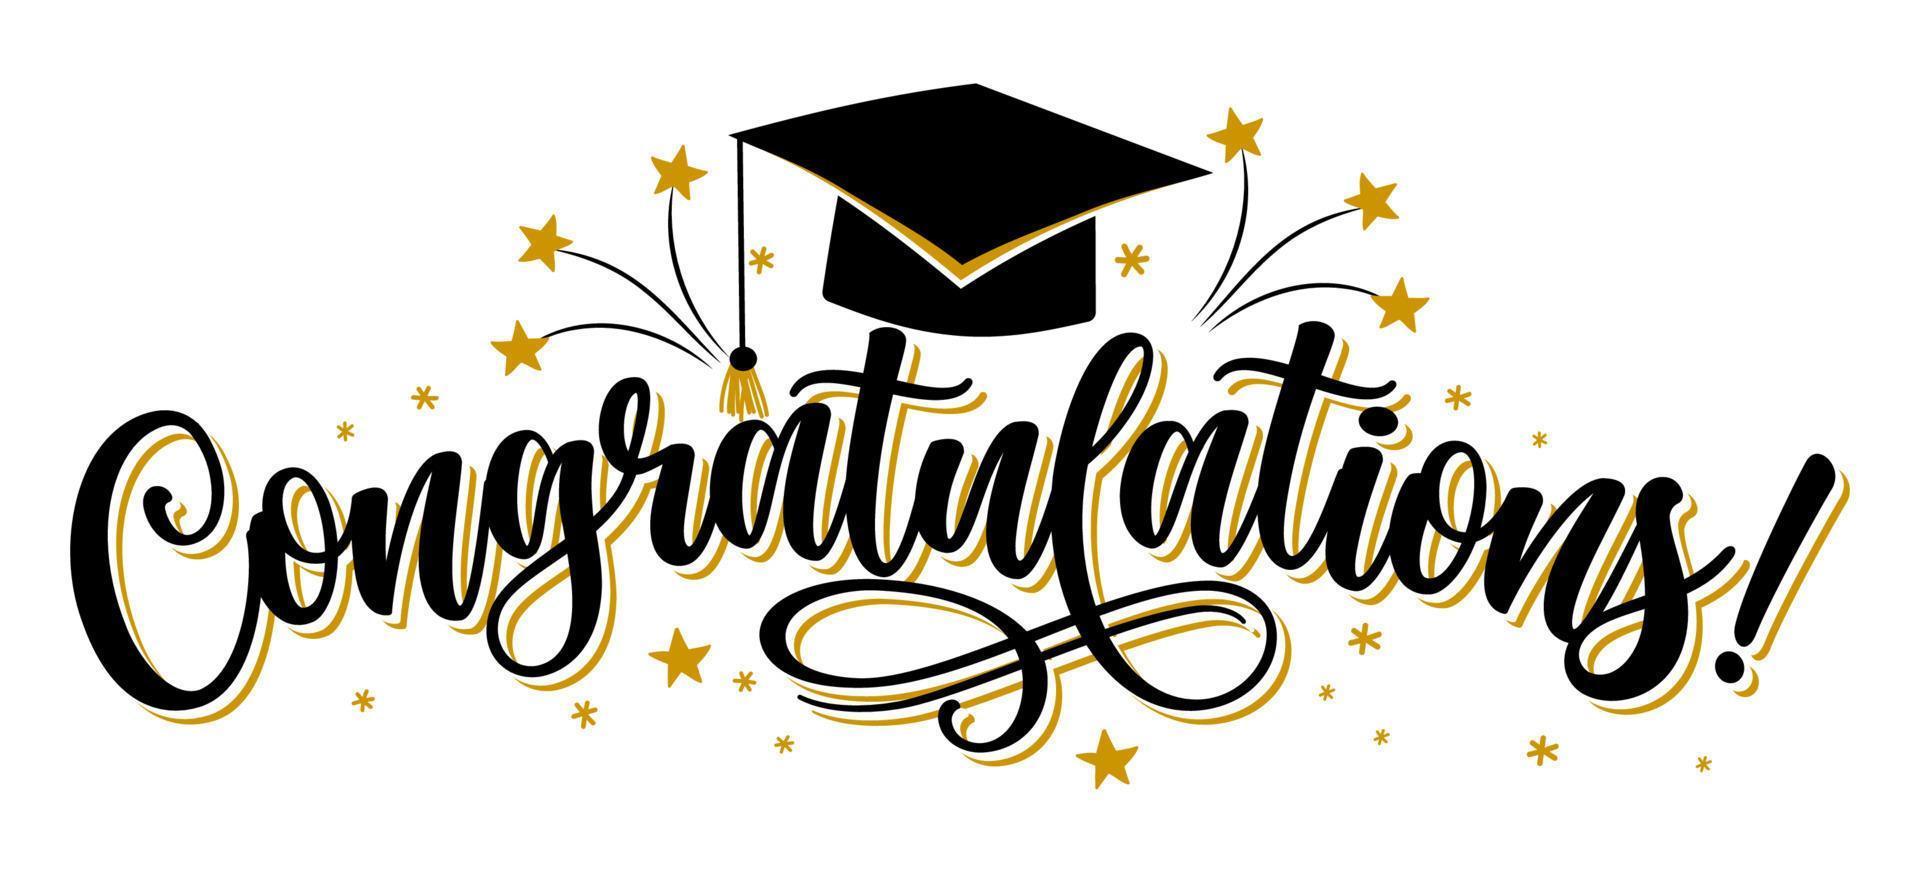 Congratulations Graduates Class of 2022 Typography. black text